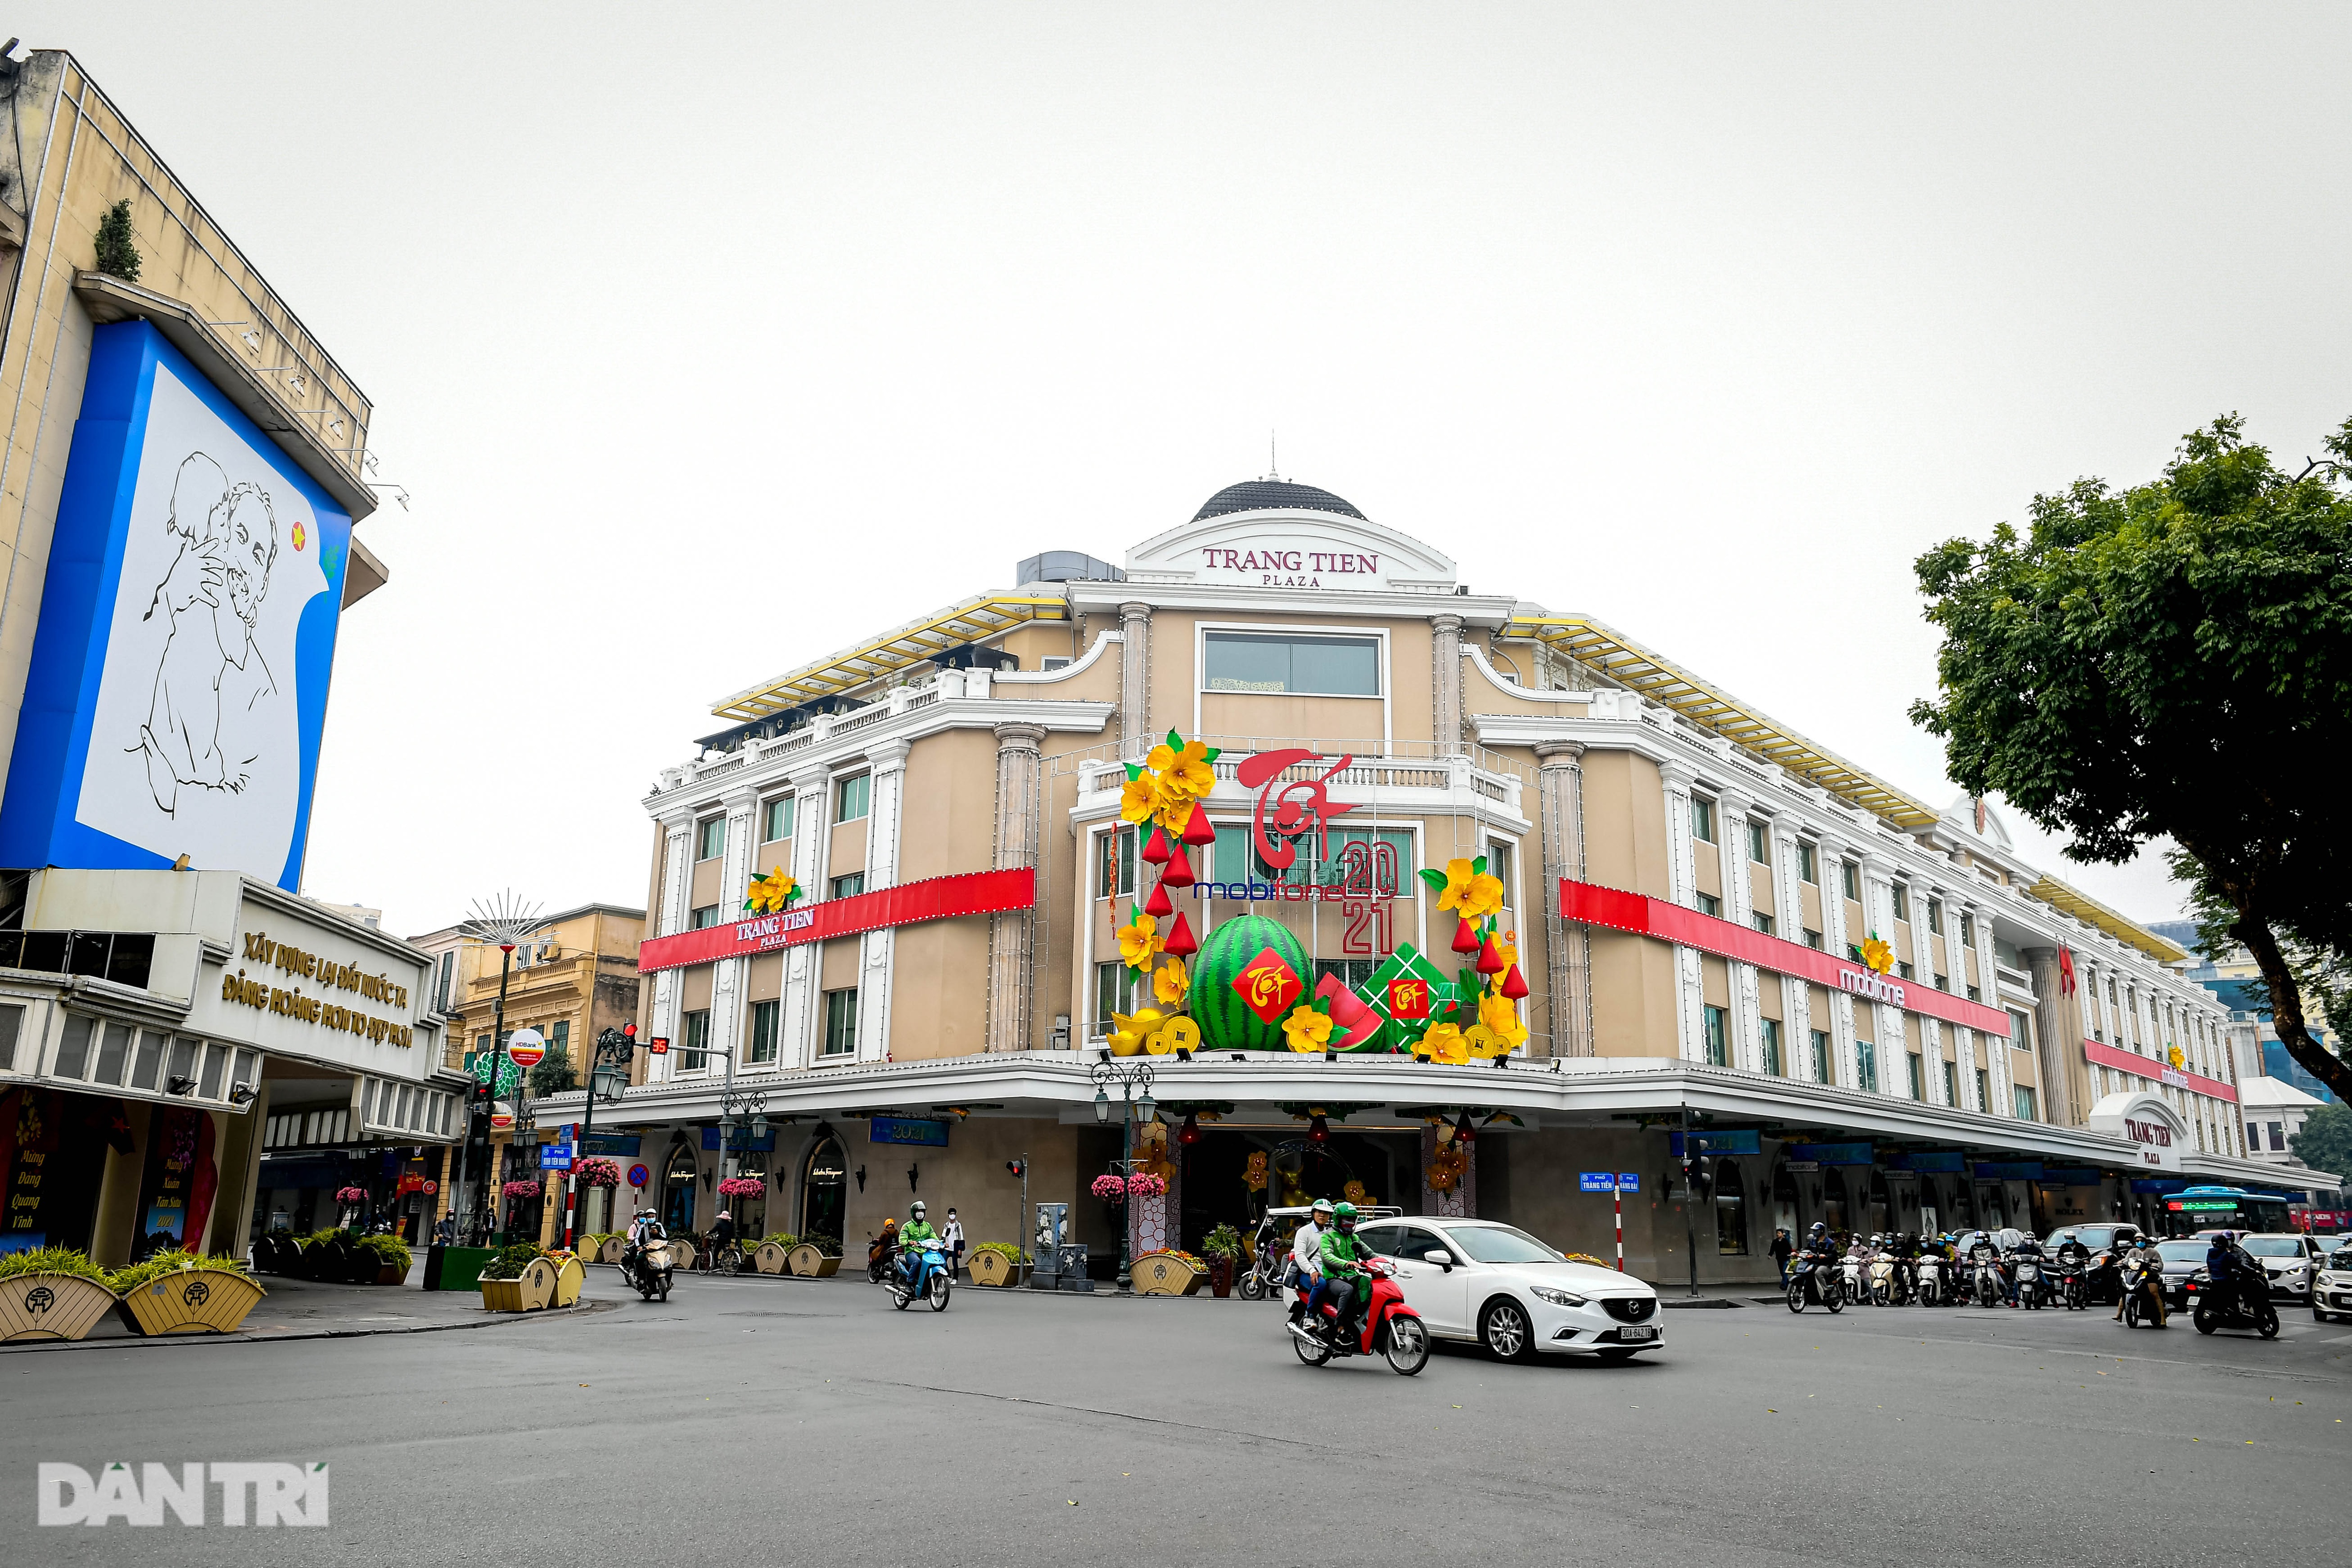 Colourful Hanoi streets ready for Tet